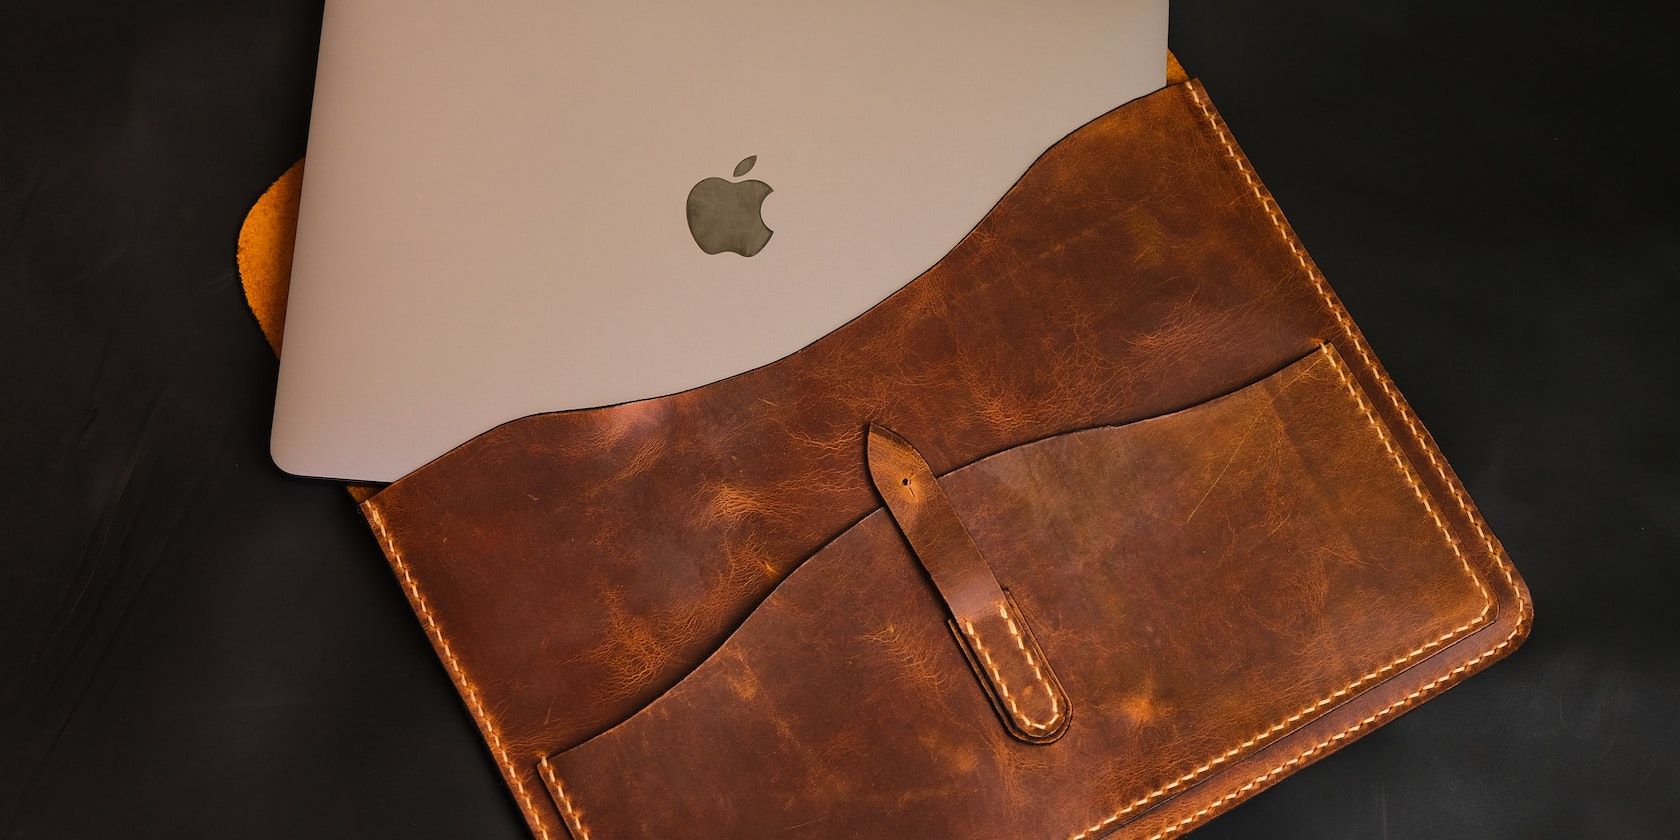 MacBook Air in Leather Bag